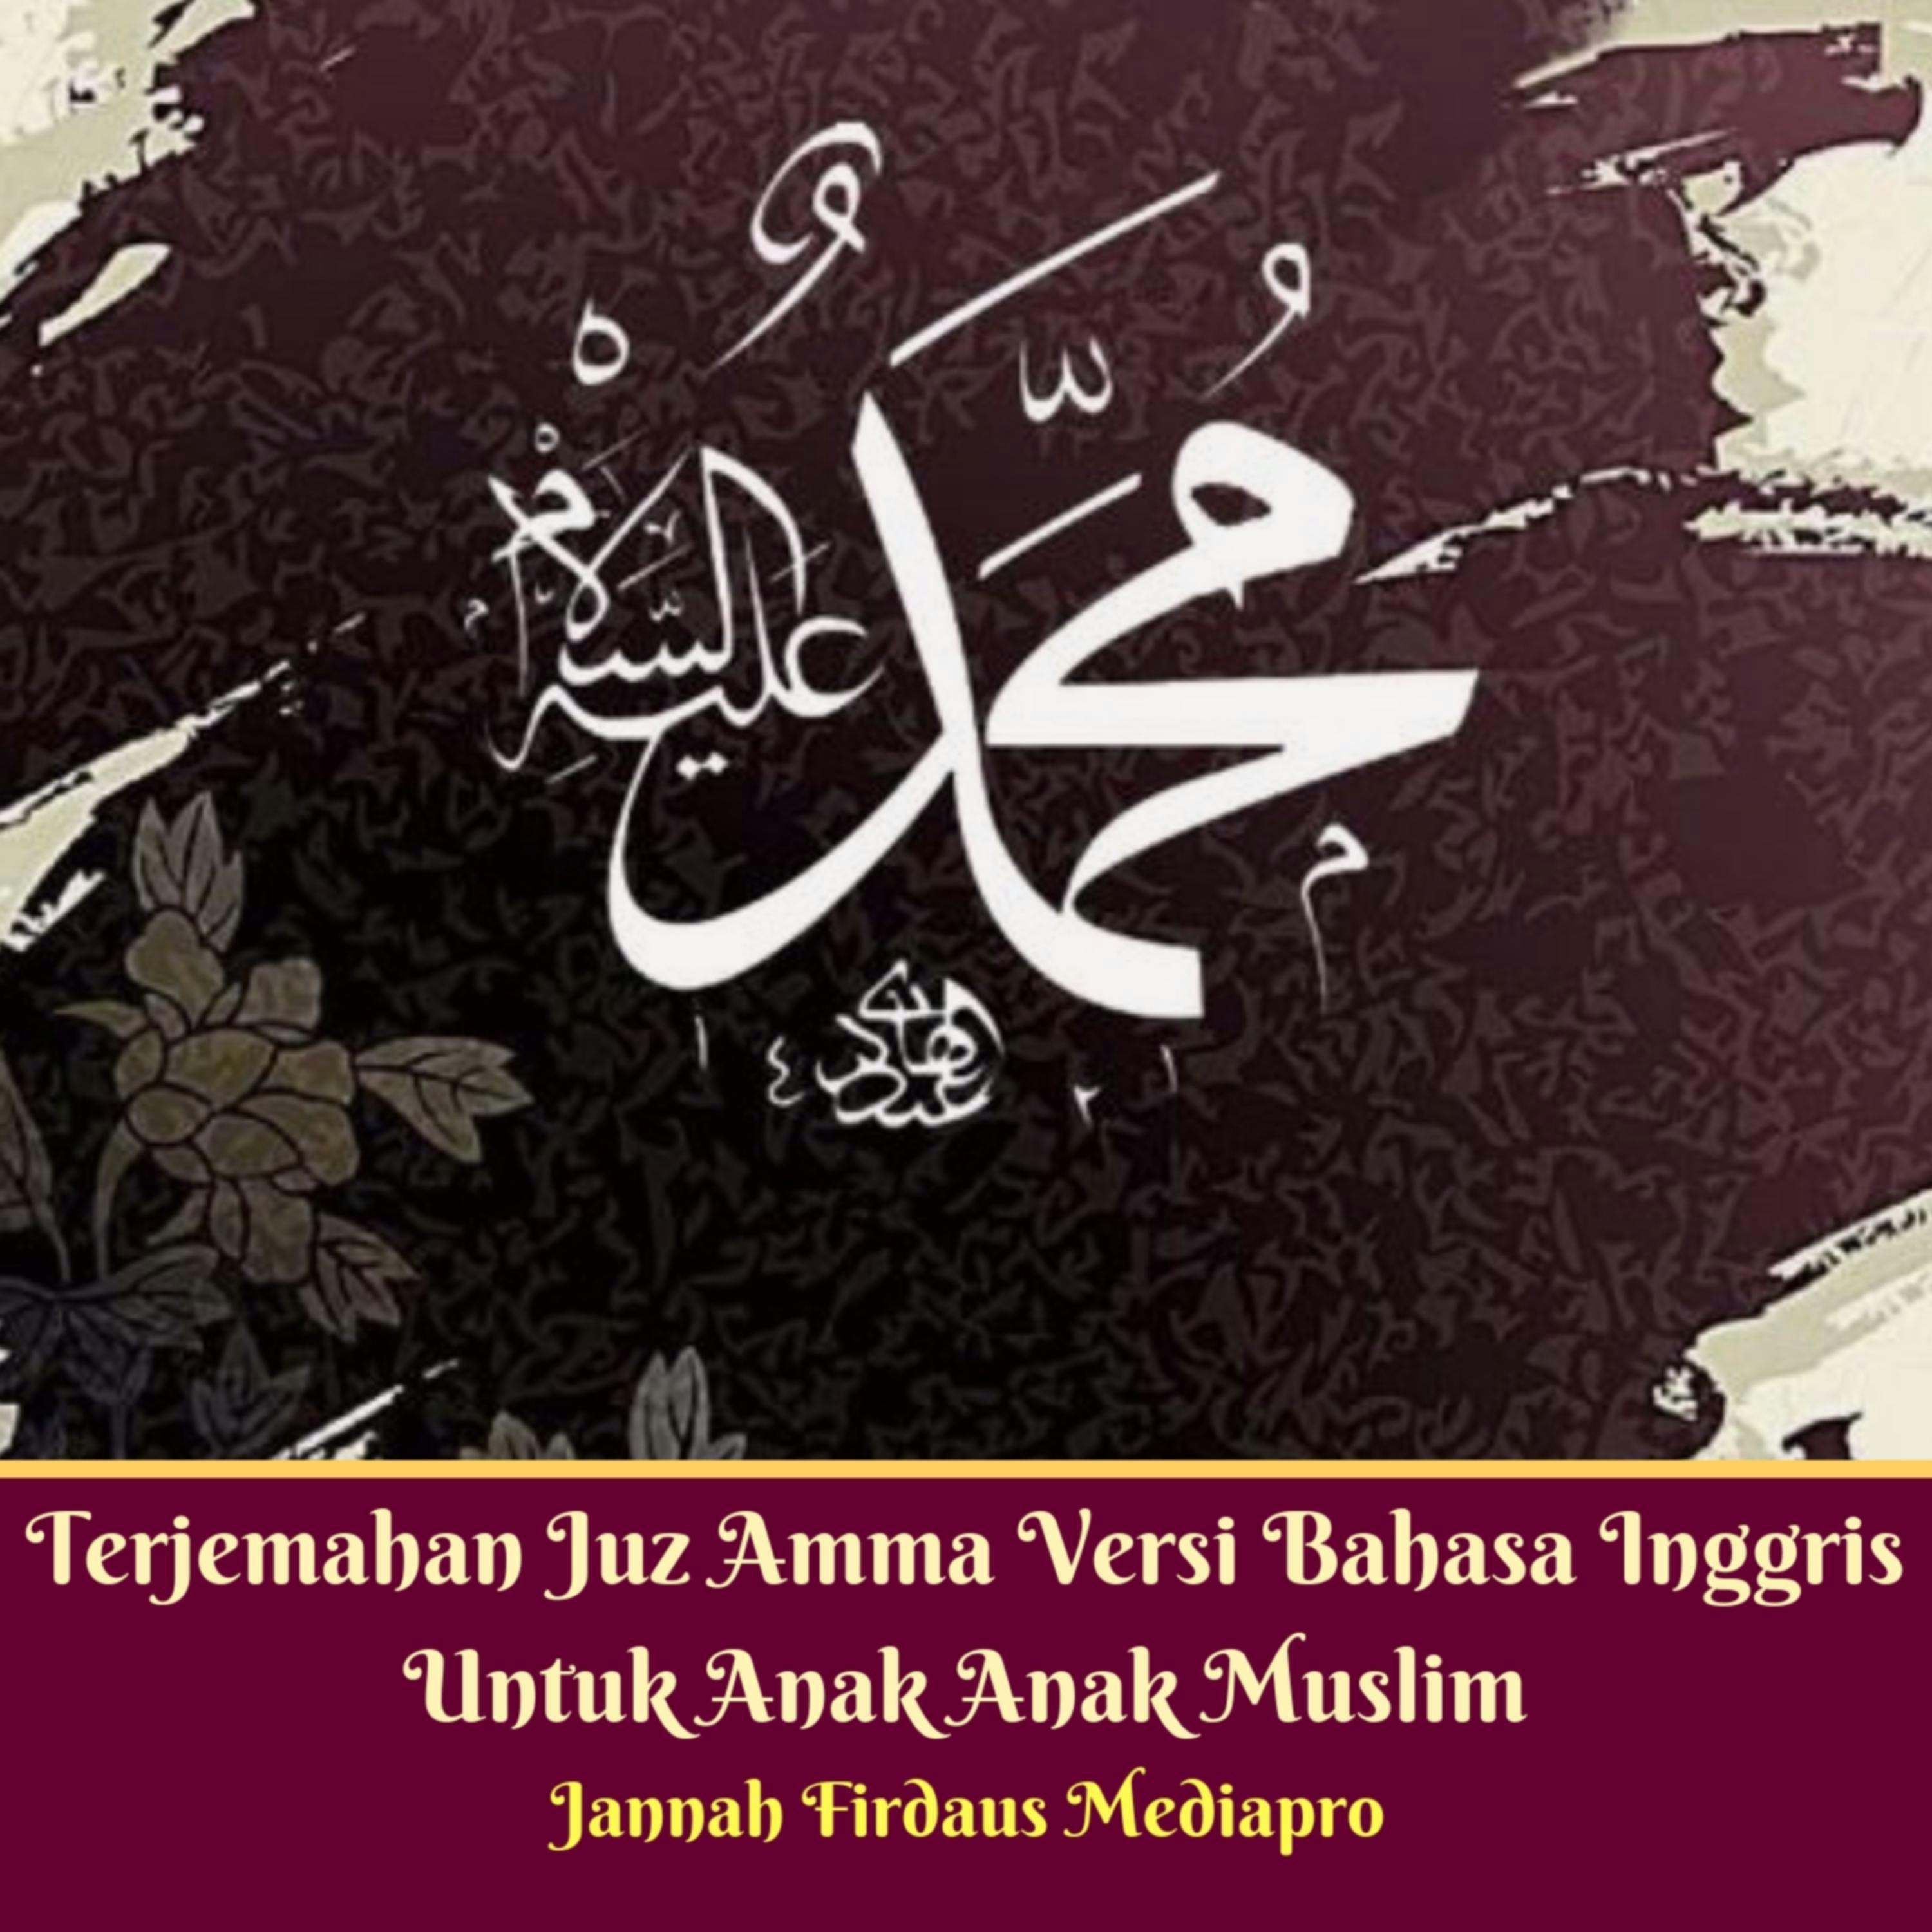 Terjemahan Juz Amma Versi Bahasa Inggris Untuk Anak Anak Muslim - Jannah Firdaus Mediapro